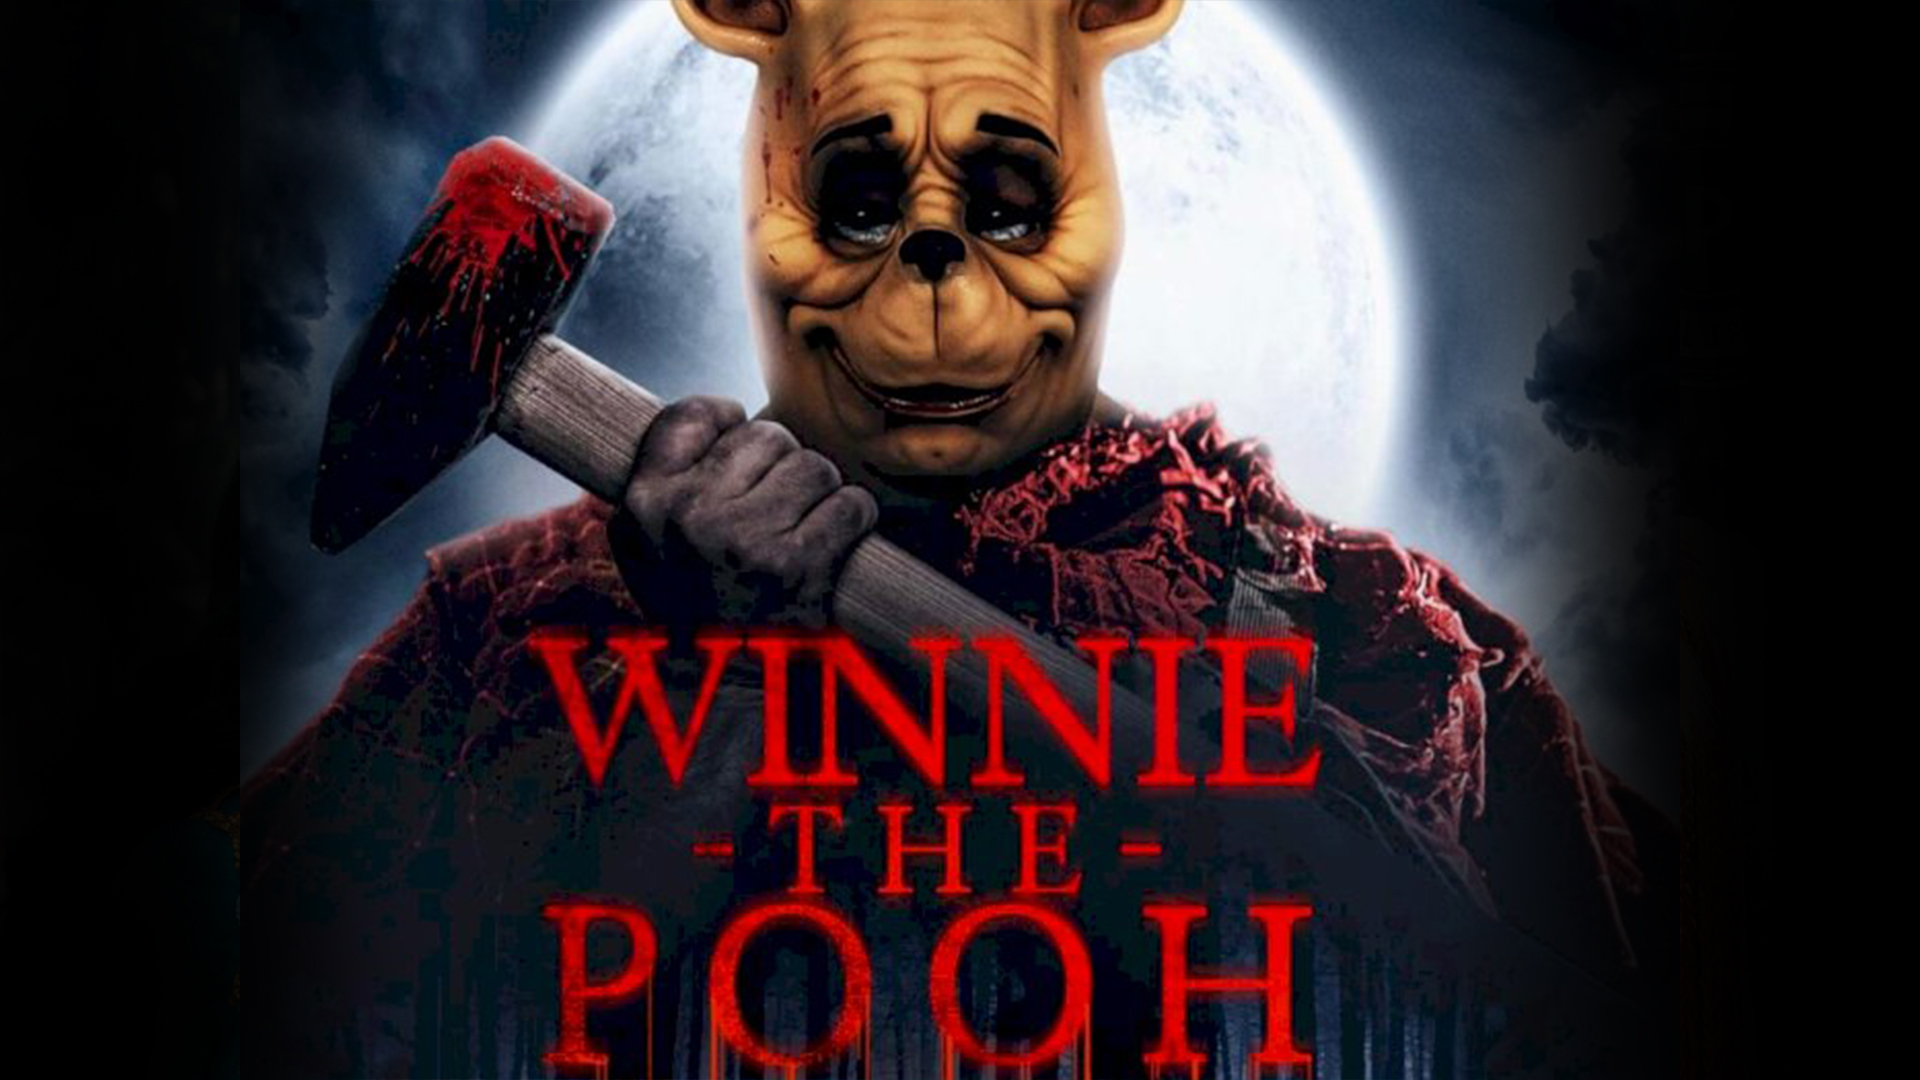 WinnieThePooh Horror Movie Gets Terrifying Trailer